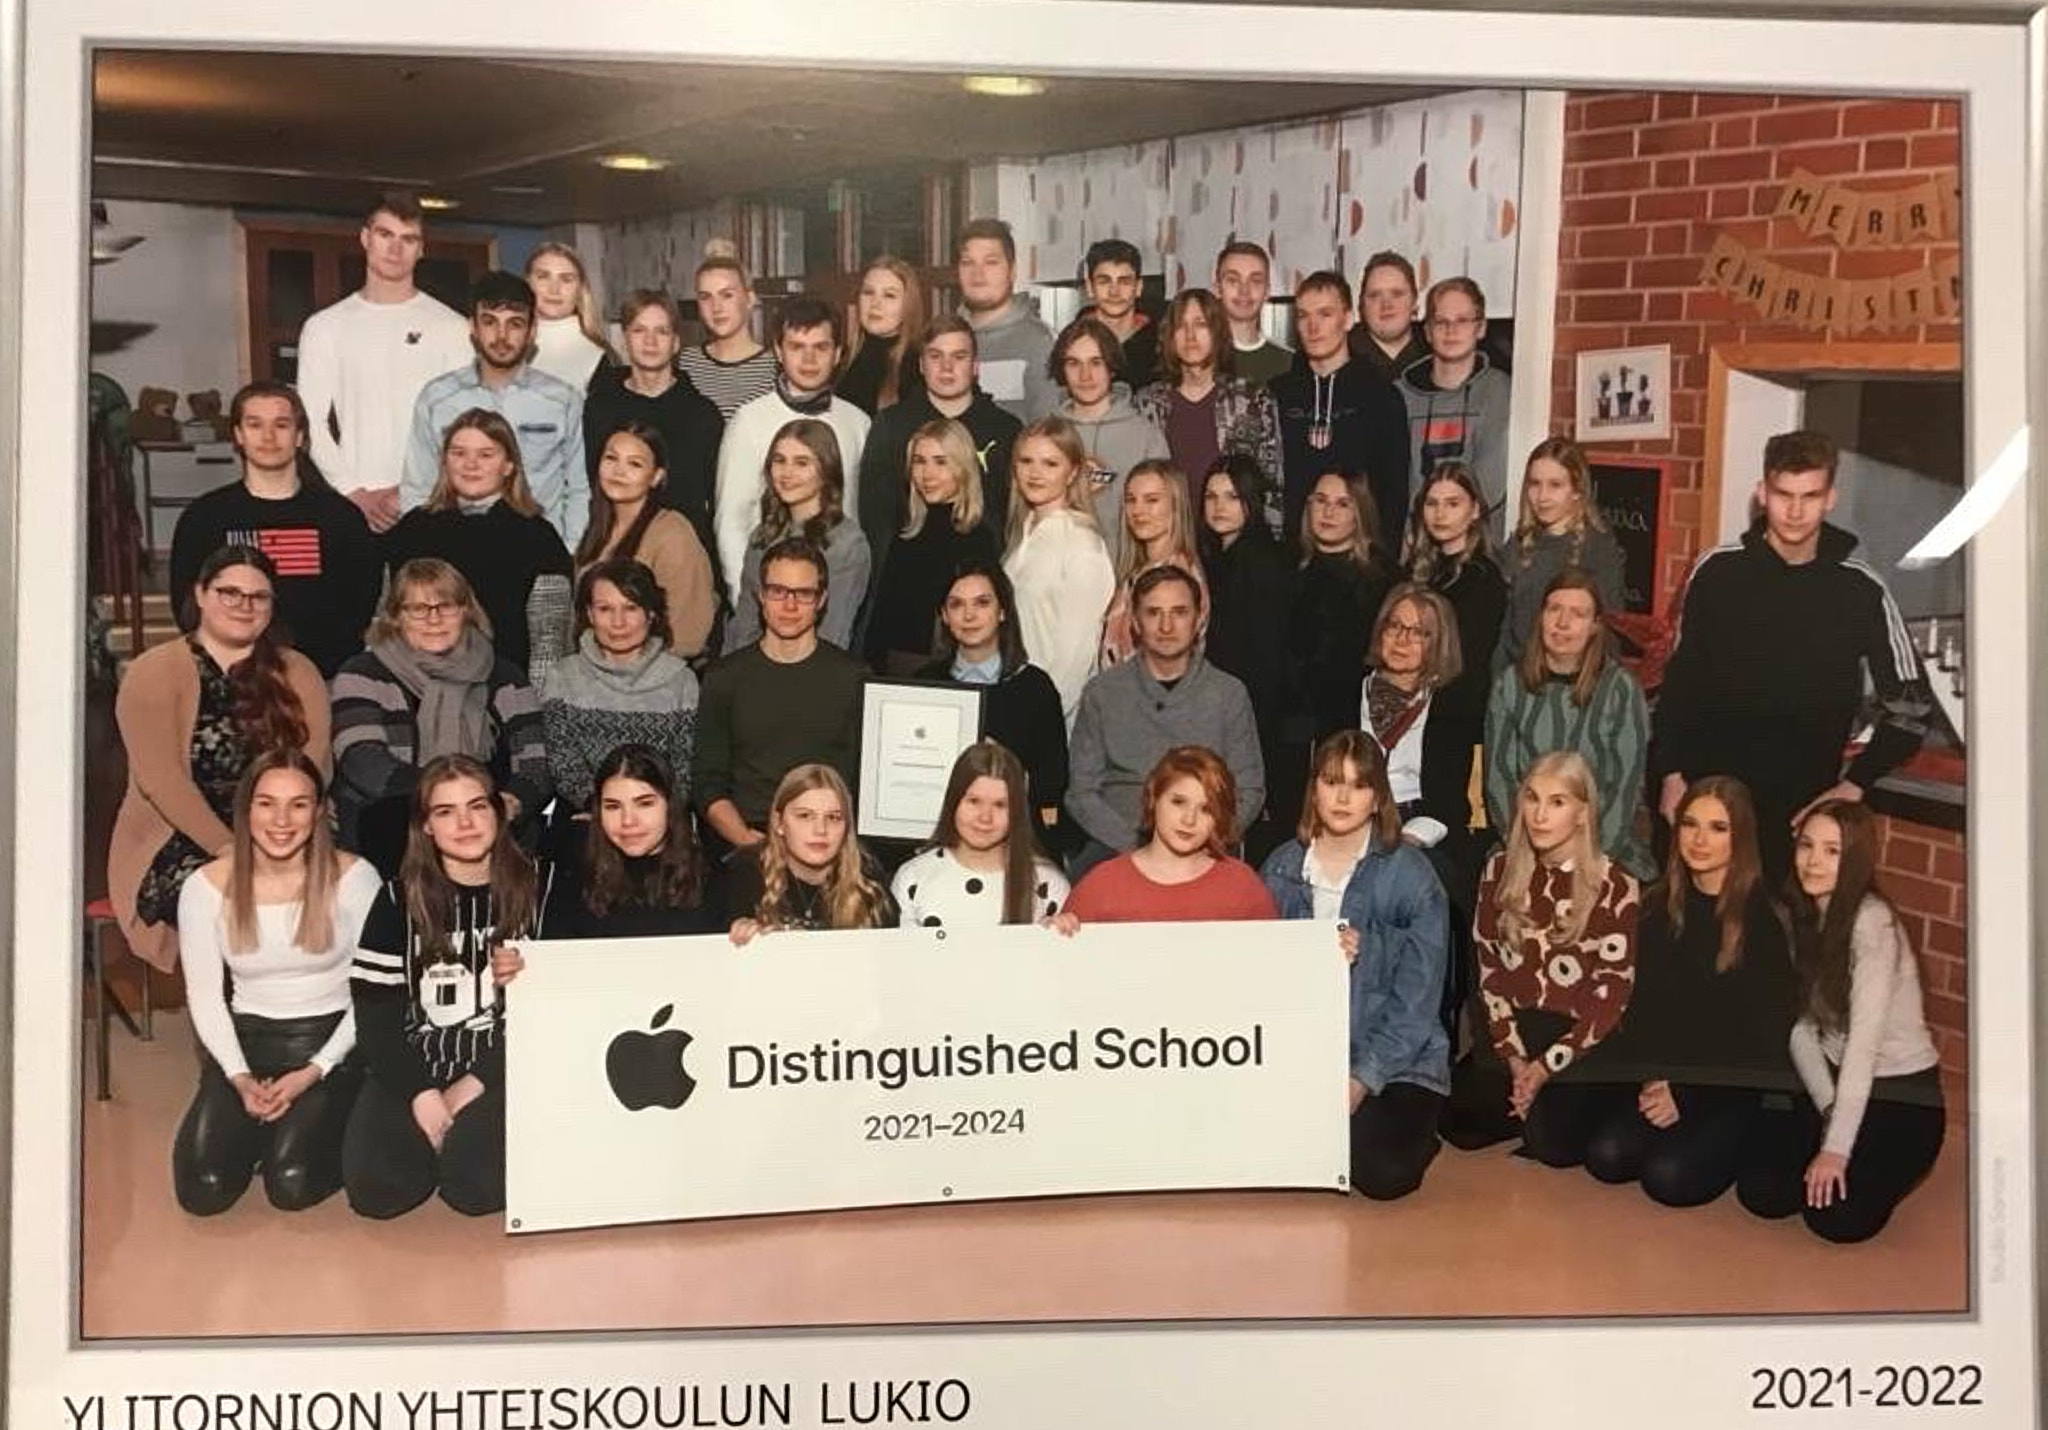 Apple Distinguished School